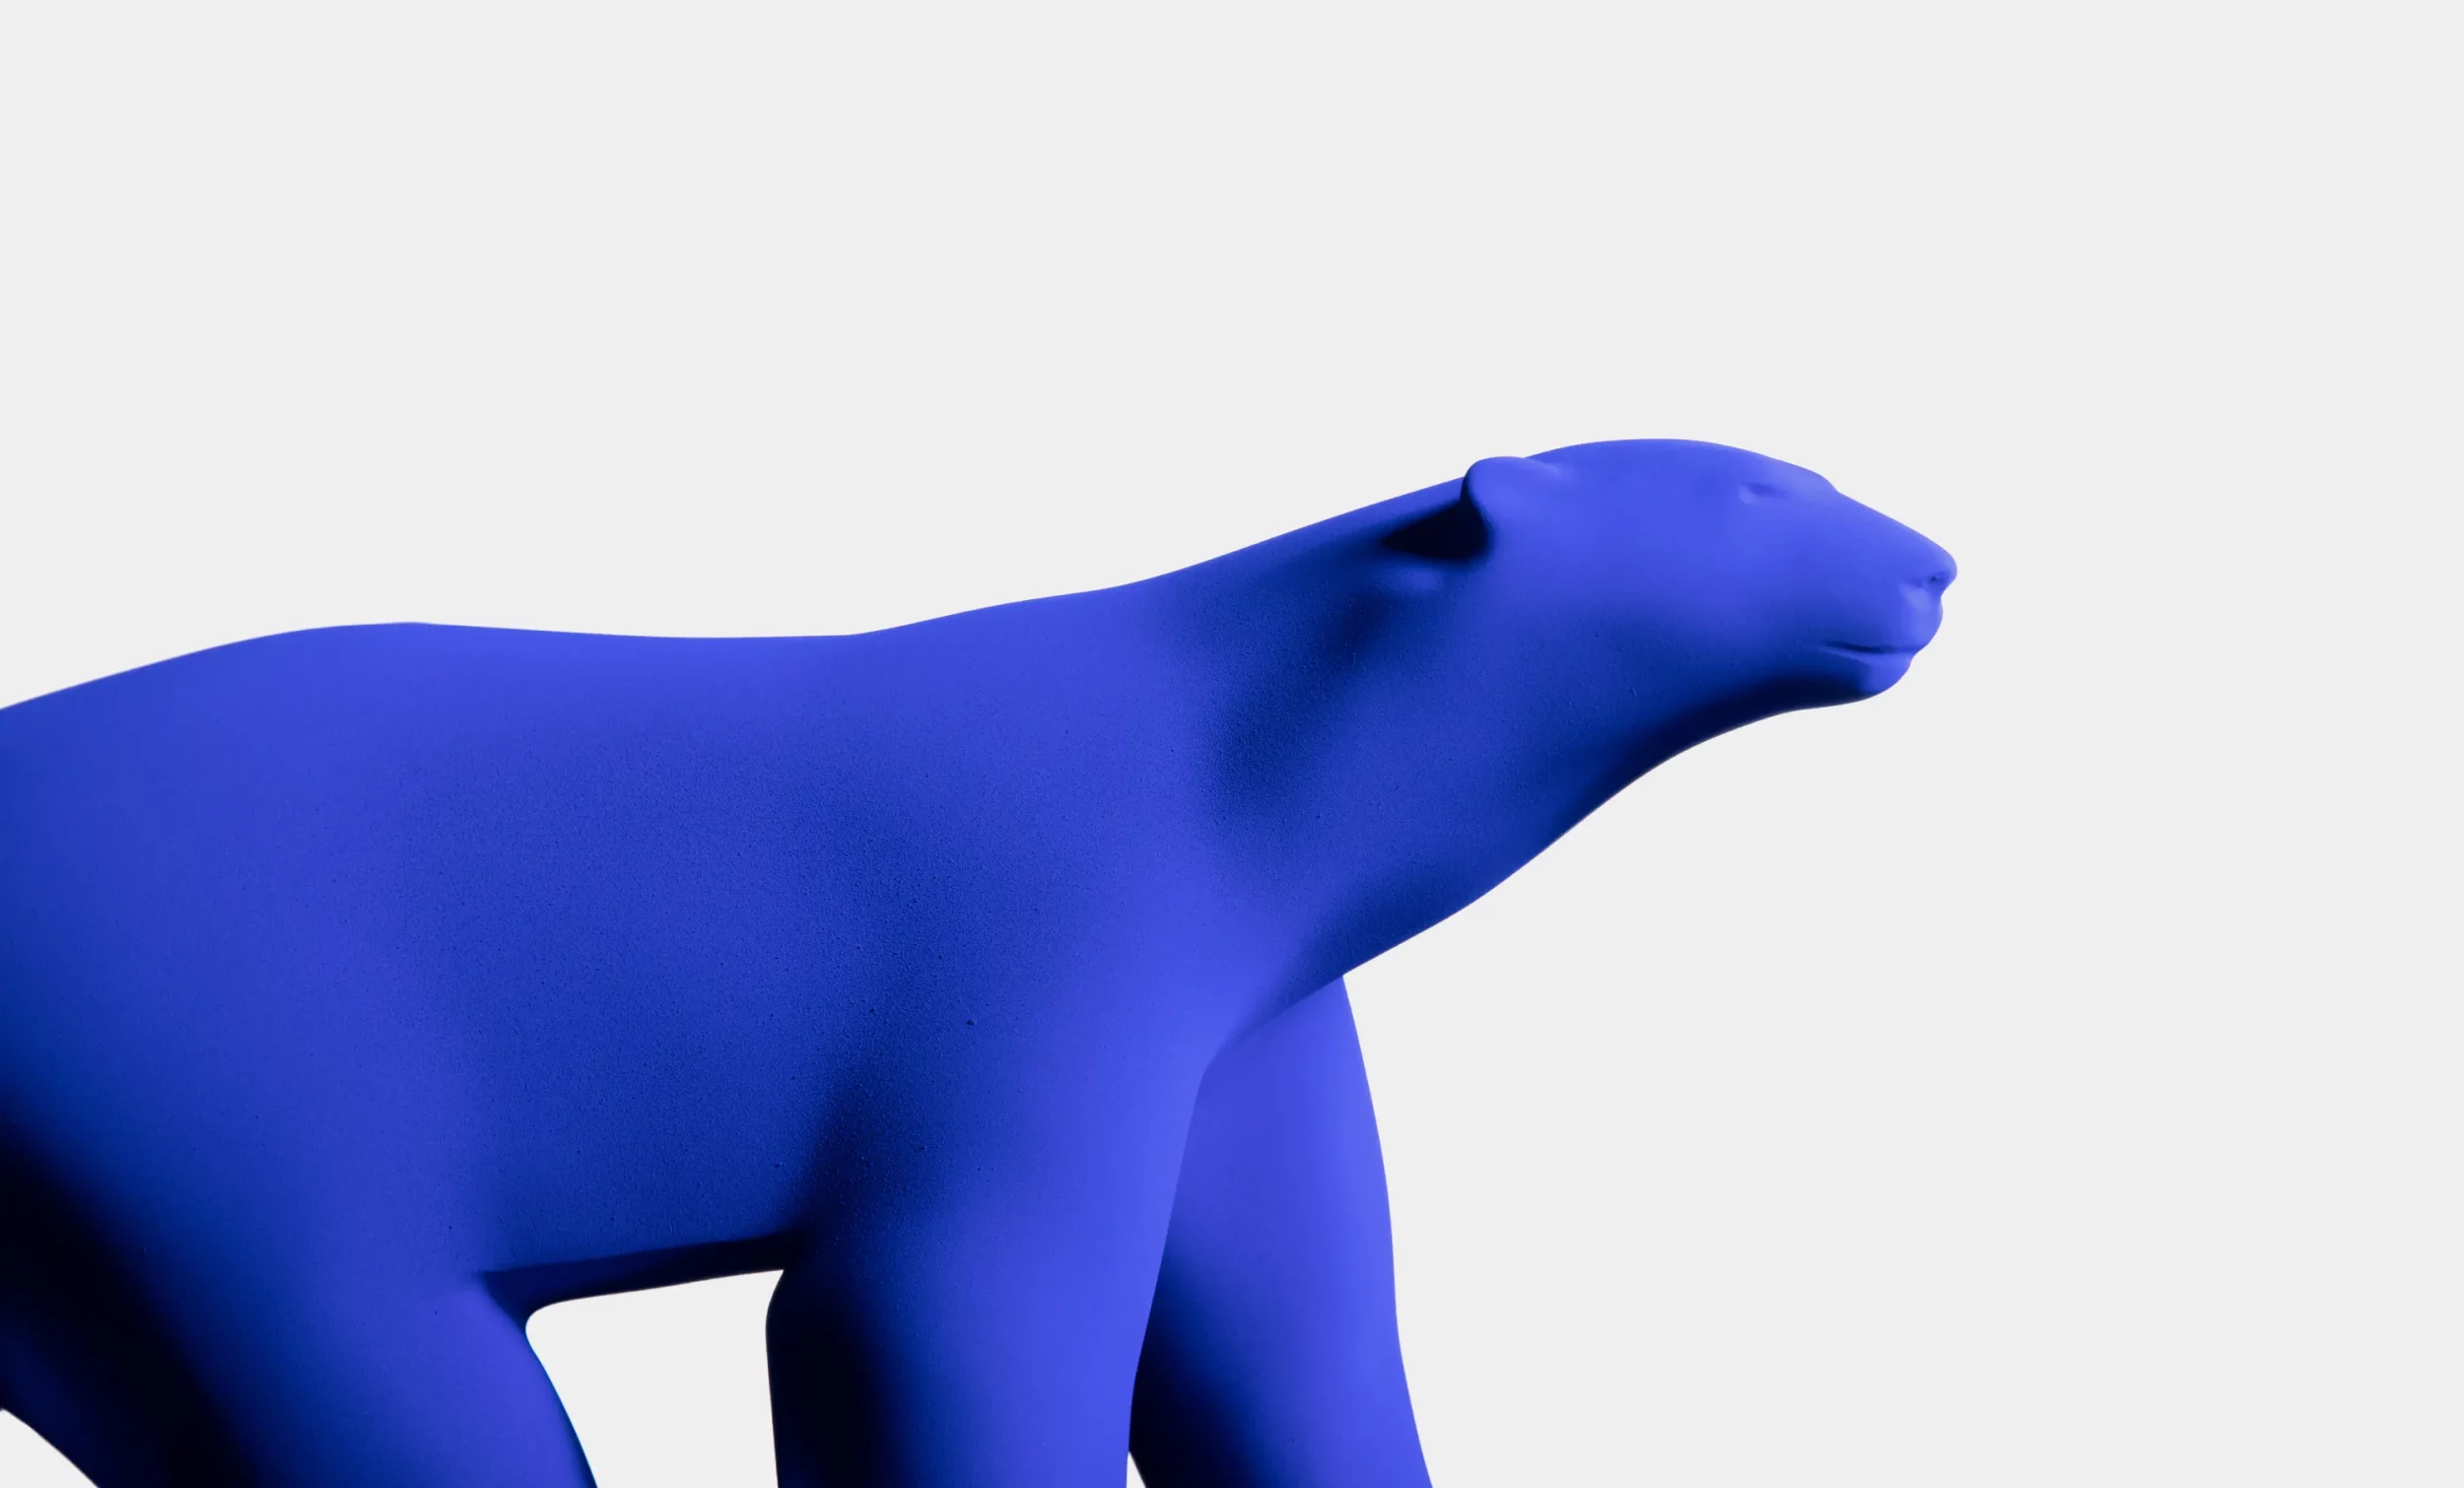 The François Pompon's Bear, Yves Klein limited edition